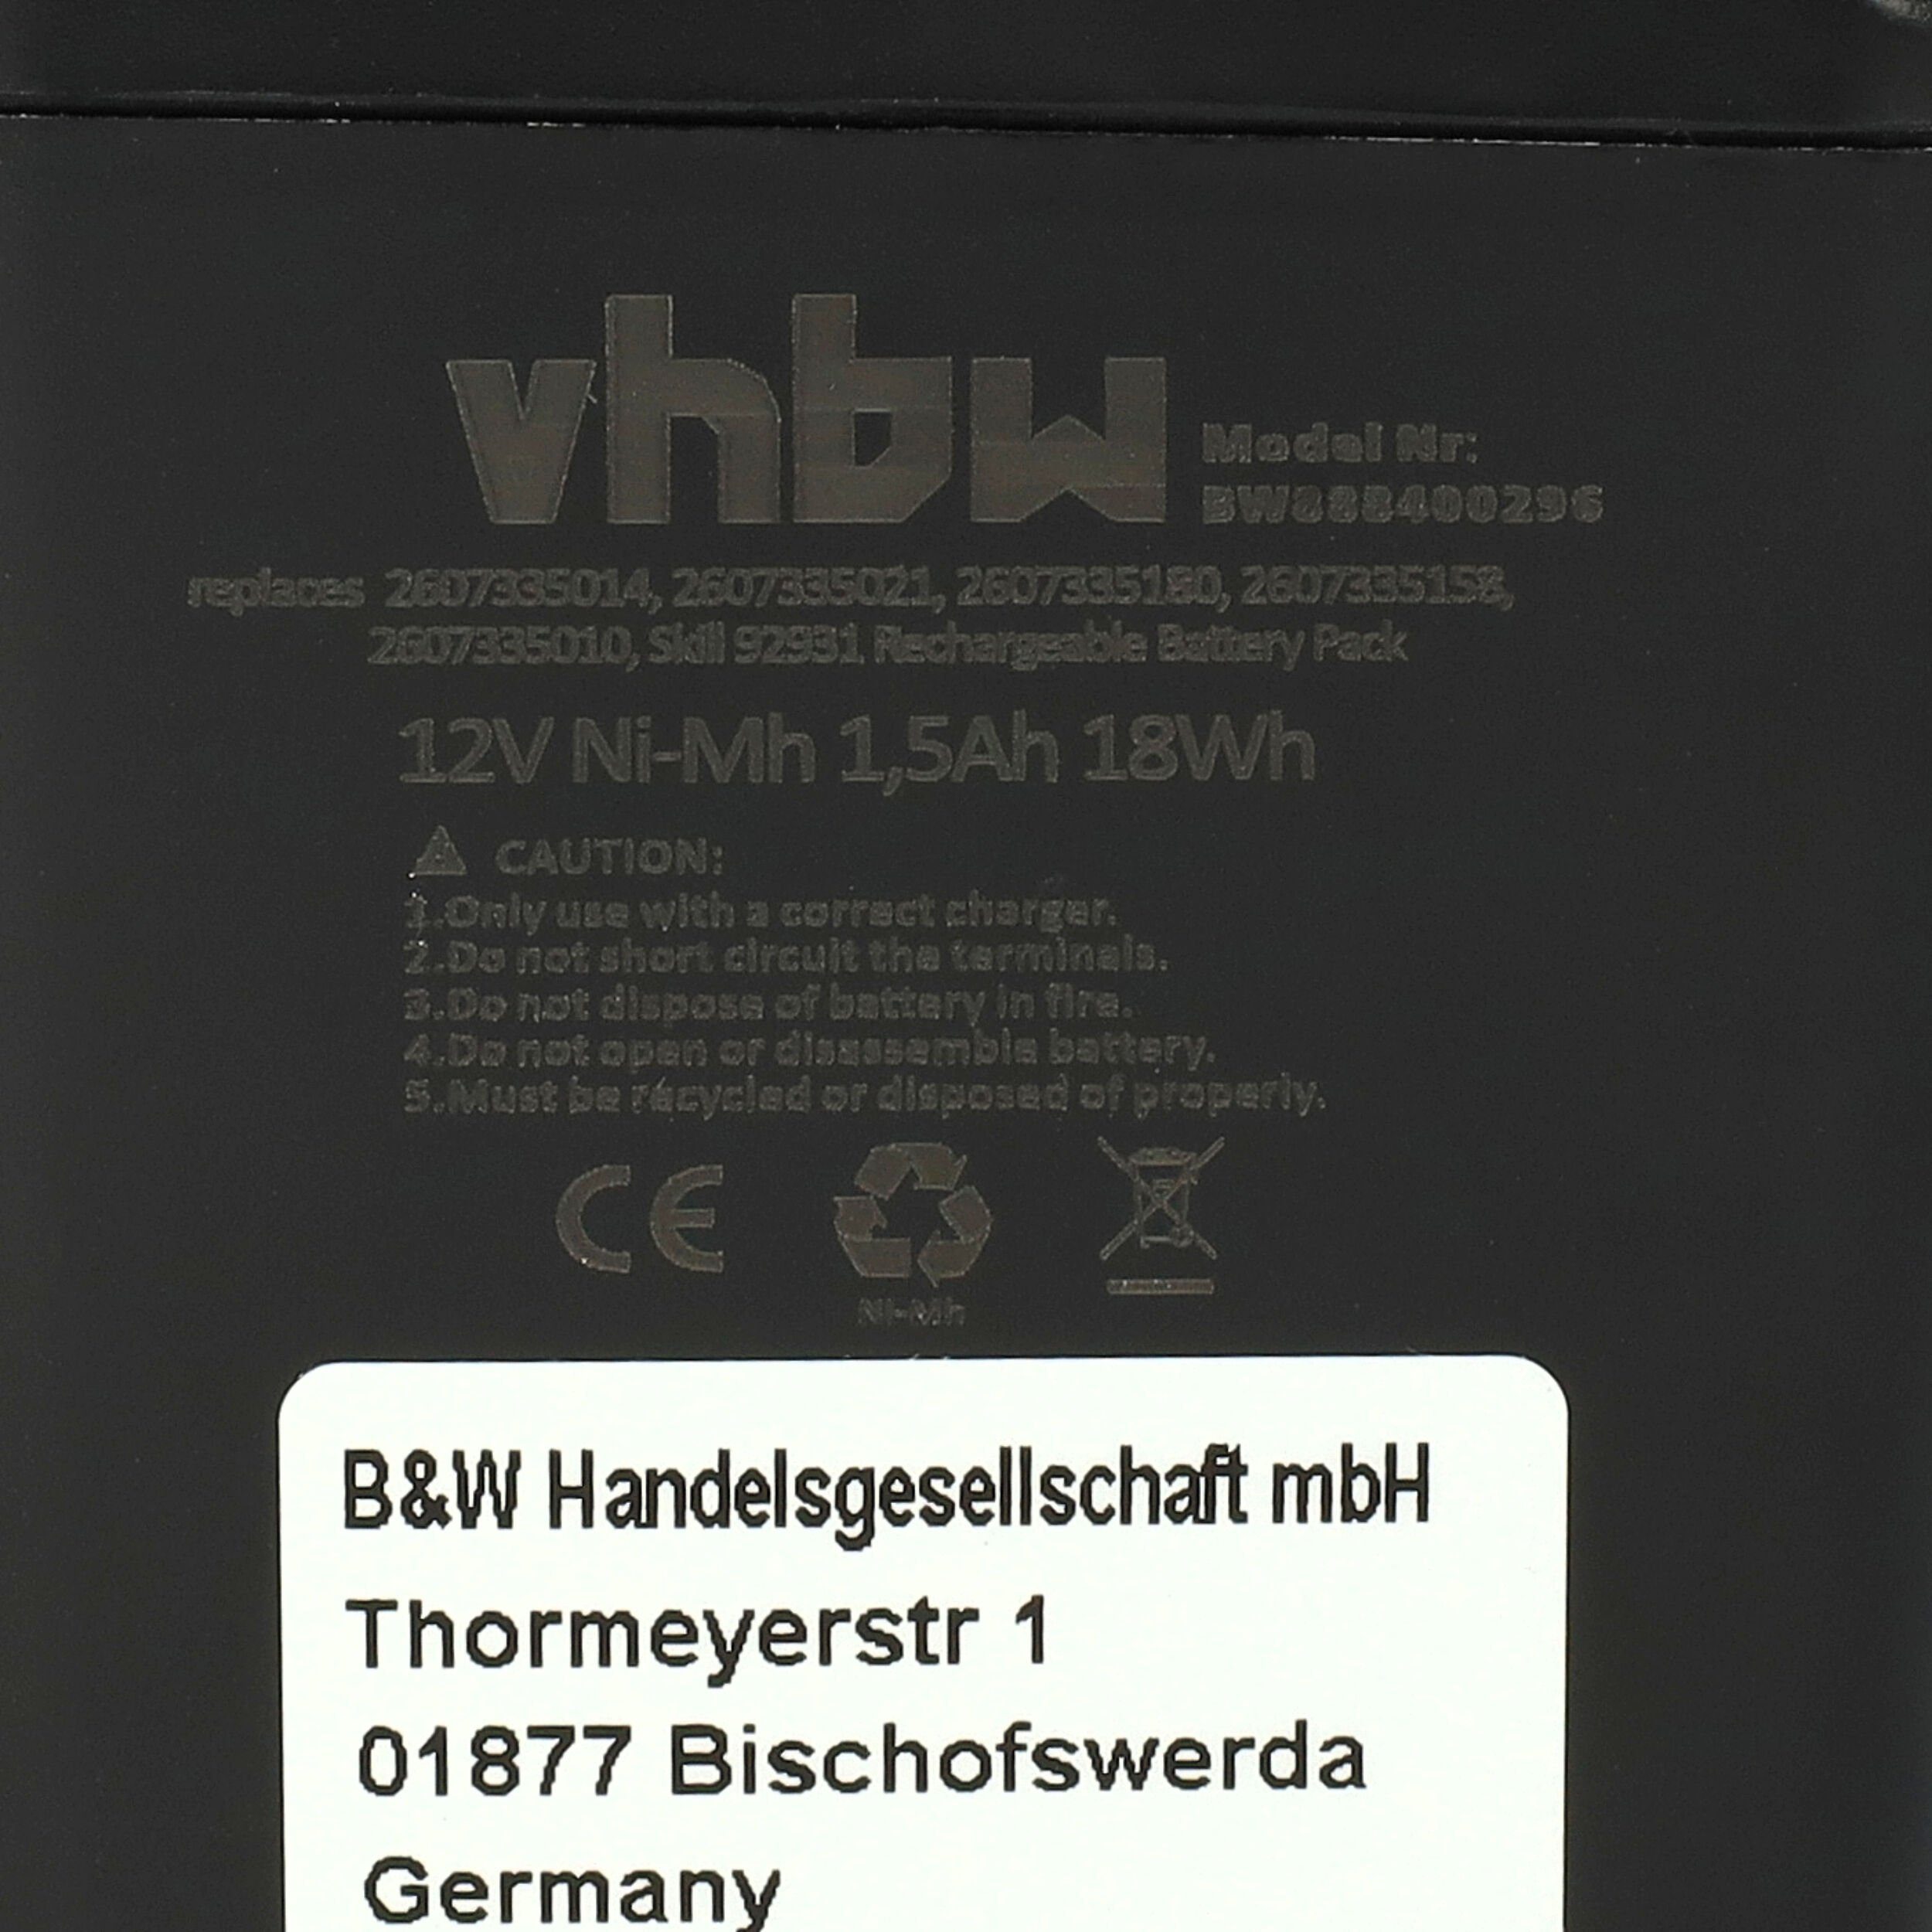 vhbw kompatibel mit Bosch NiMH GSR-Serie 1500 Knolle mit 1. Akku V) mAh Generation (12